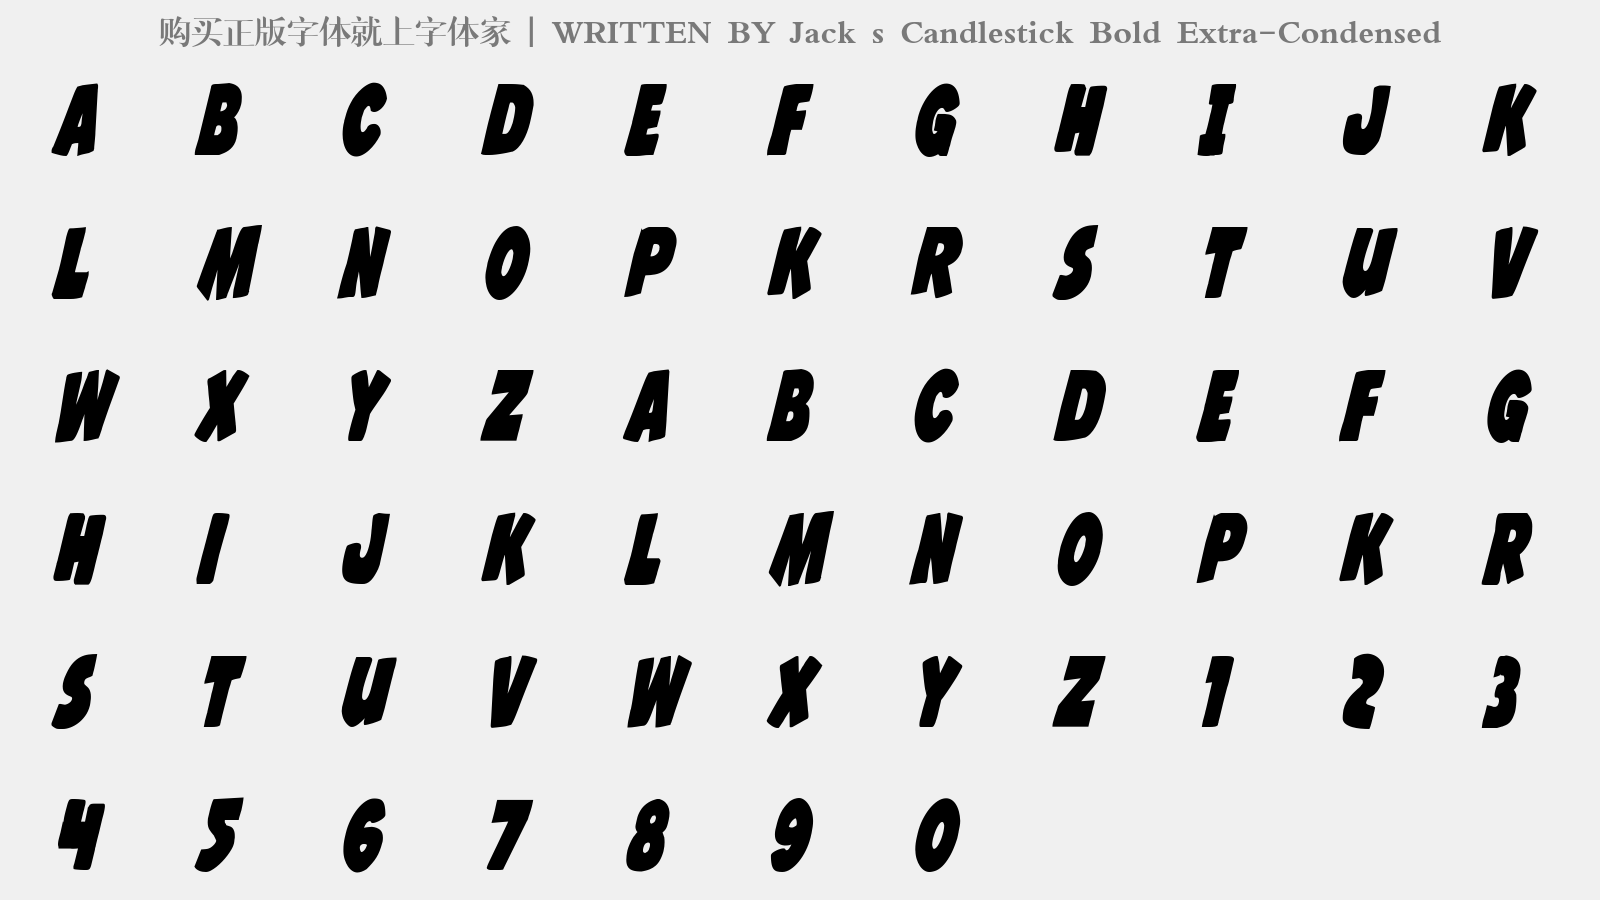 Jack s Candlestick Bold Extra-Condensed - 大写字母/小写字母/数字